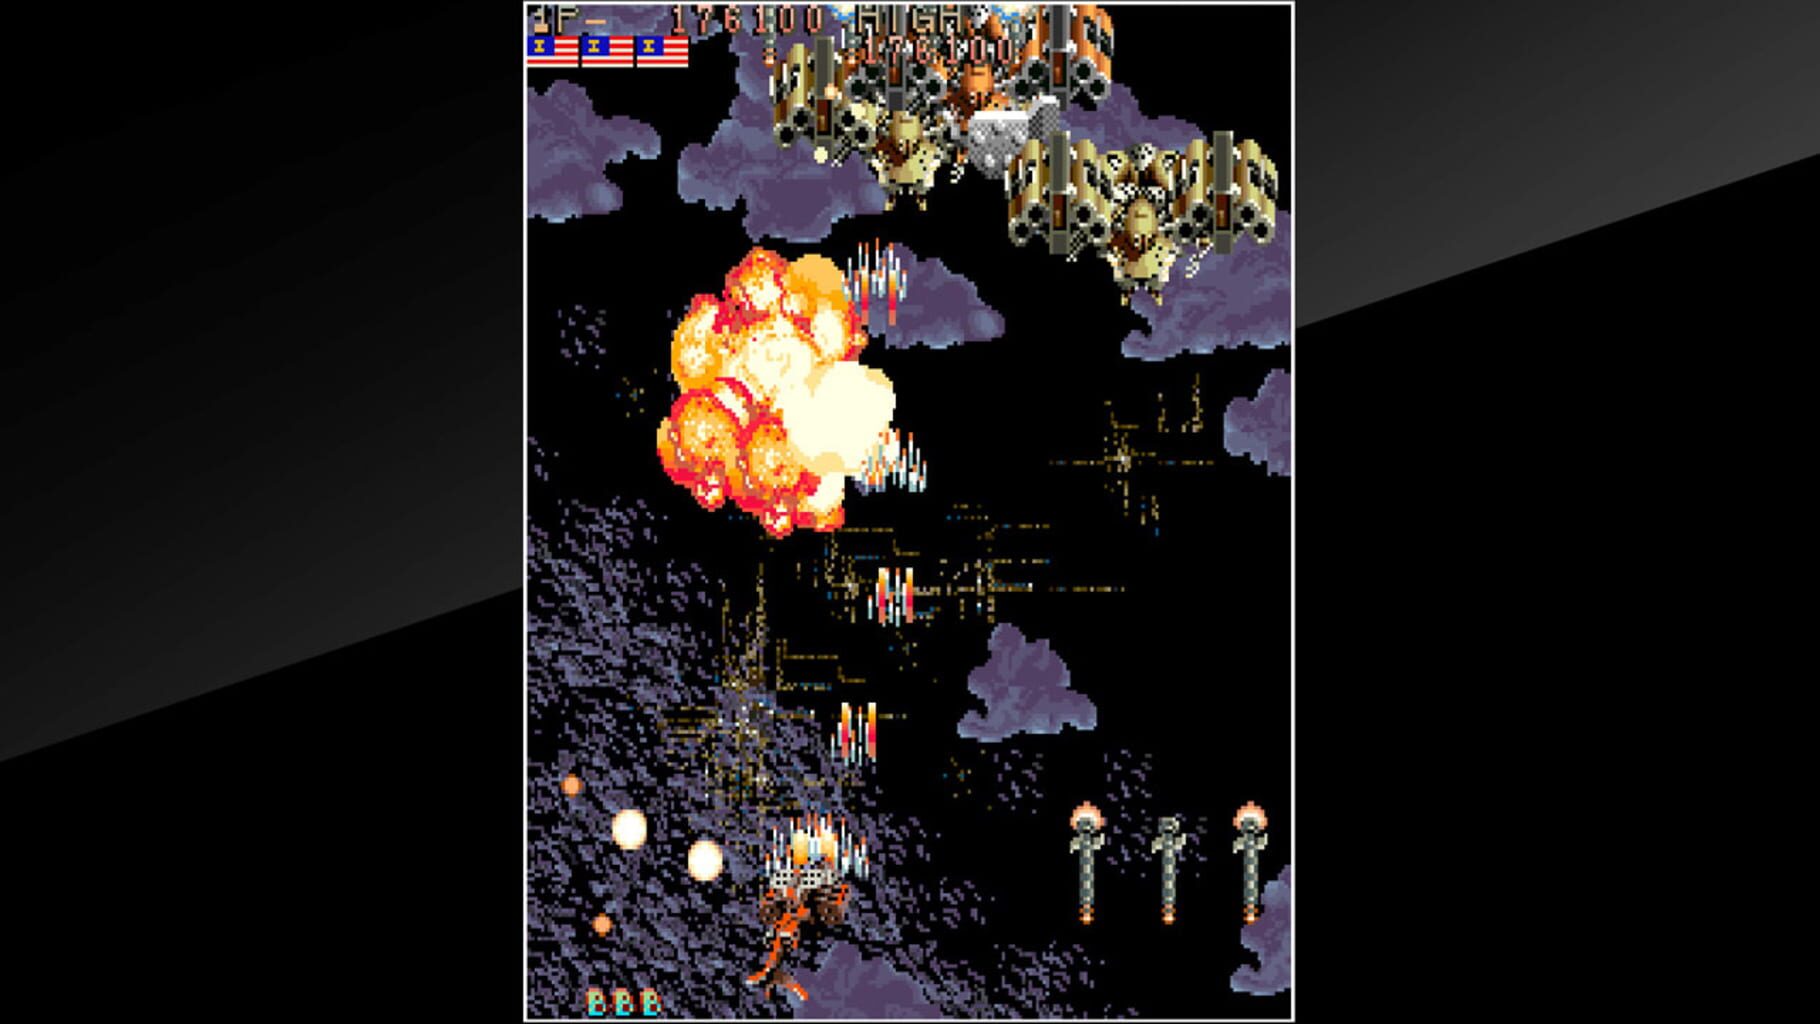 Arcade Archives: Thunder Dragon screenshot